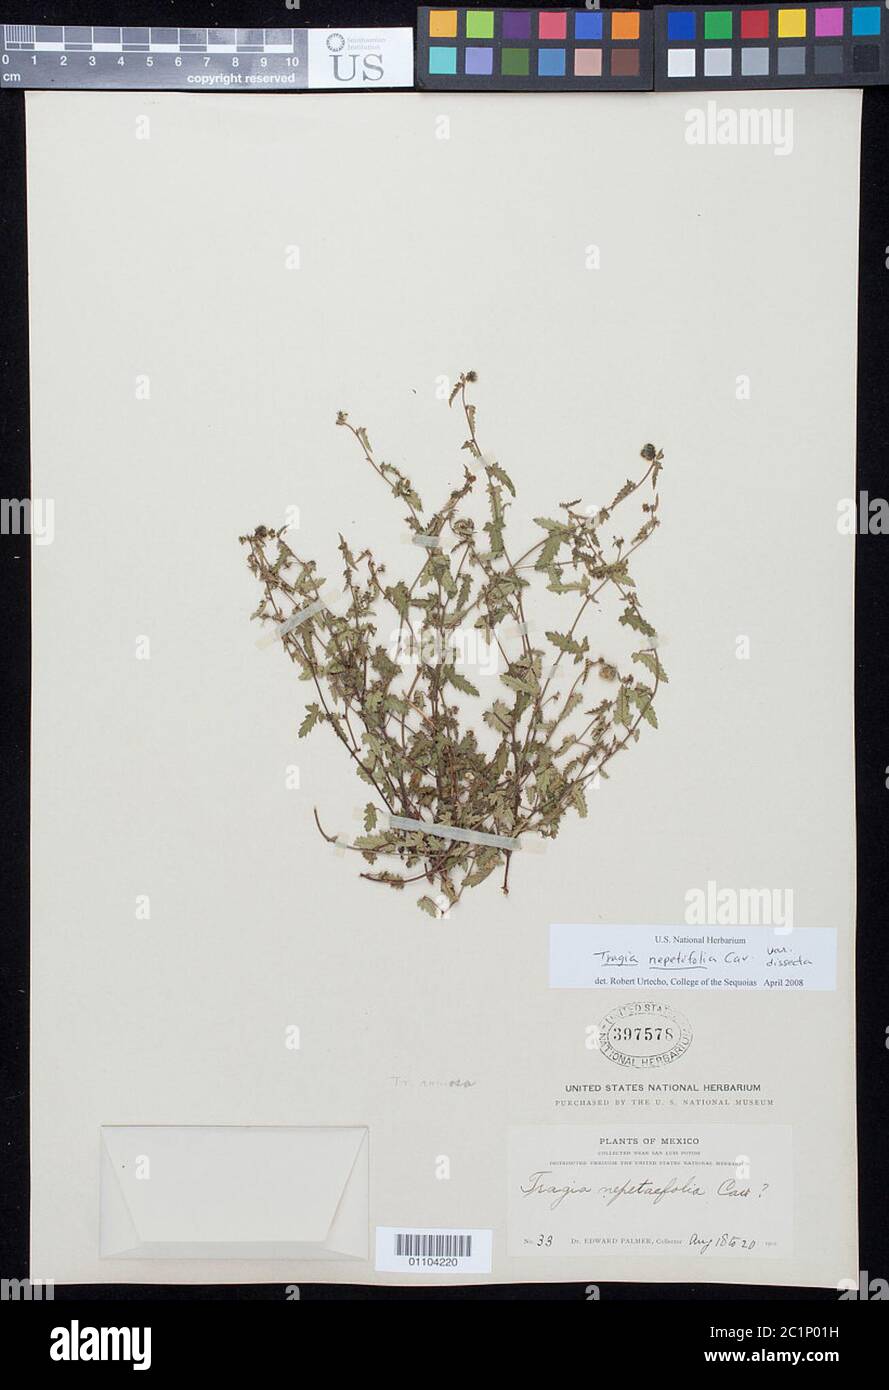 Tragia nepetifolia var dissecta Mll Arg Tragia nepetifolia var dissecta Mll Arg. Stock Photo